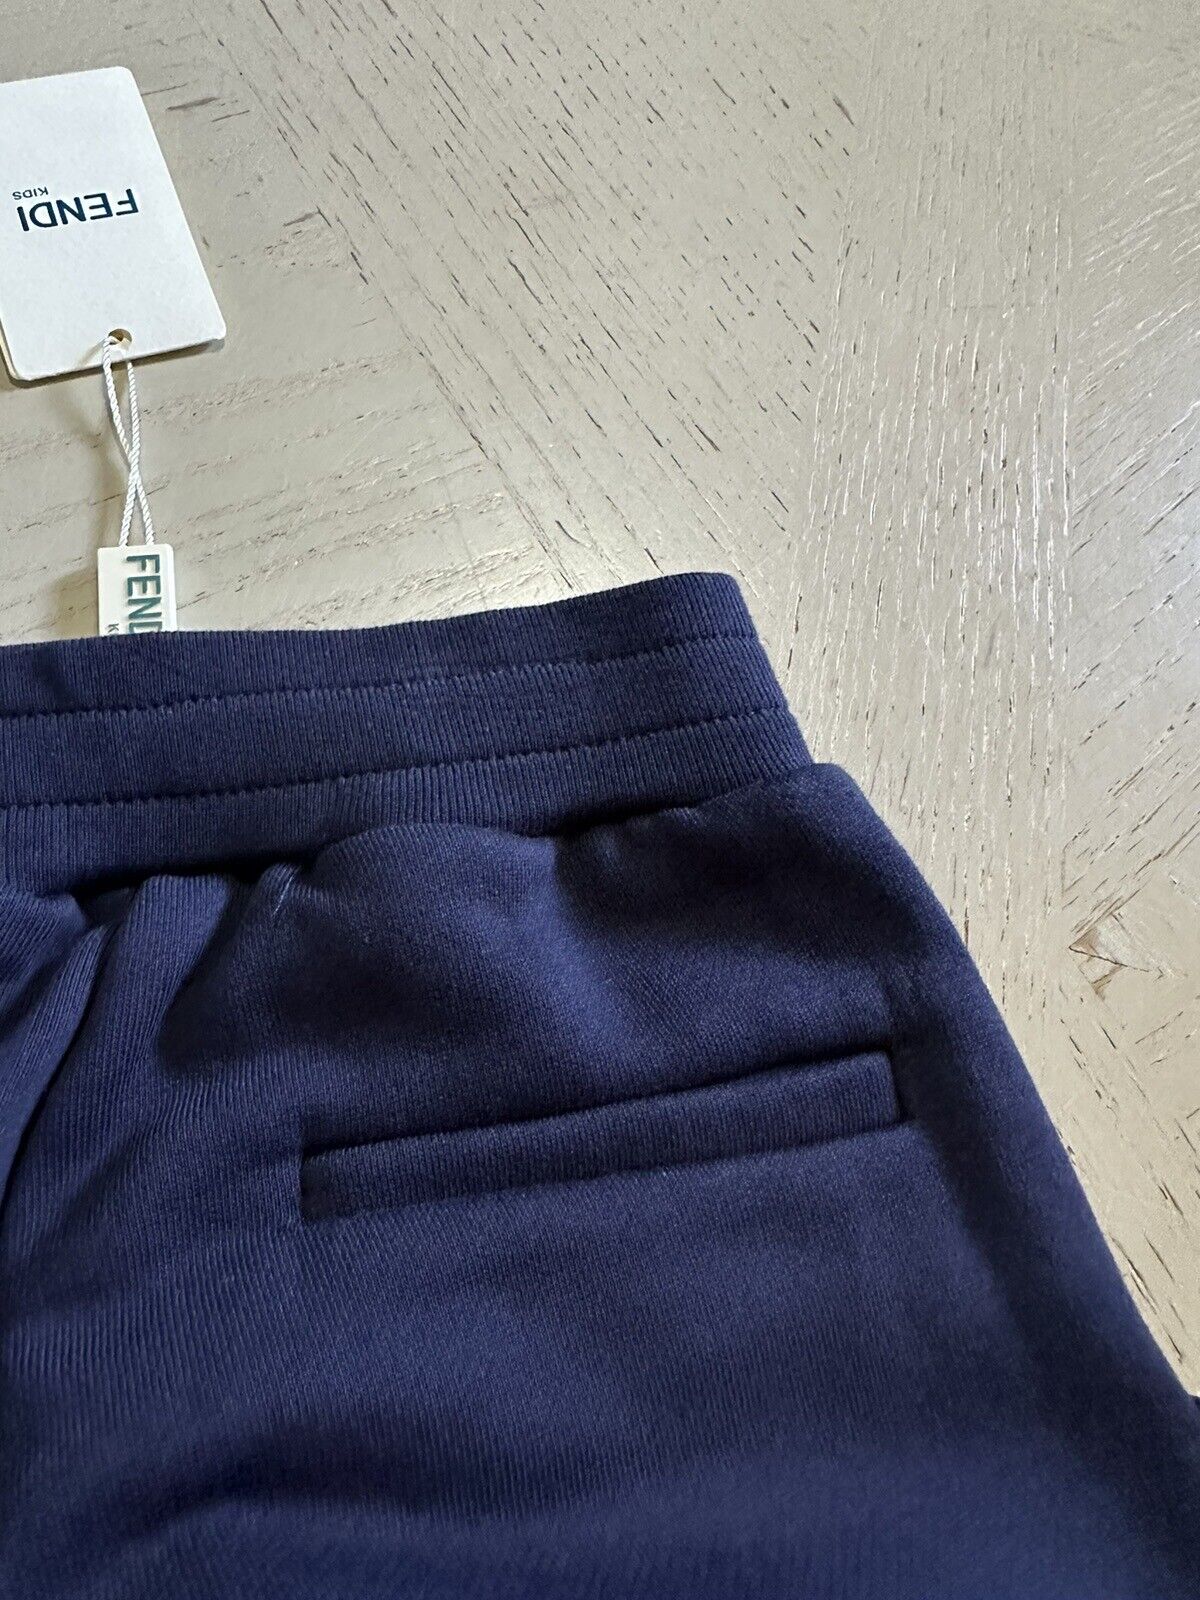 NWT $470 Fendi FF Logo Drawstring Boys Sweatpants Color Navy Size 6A